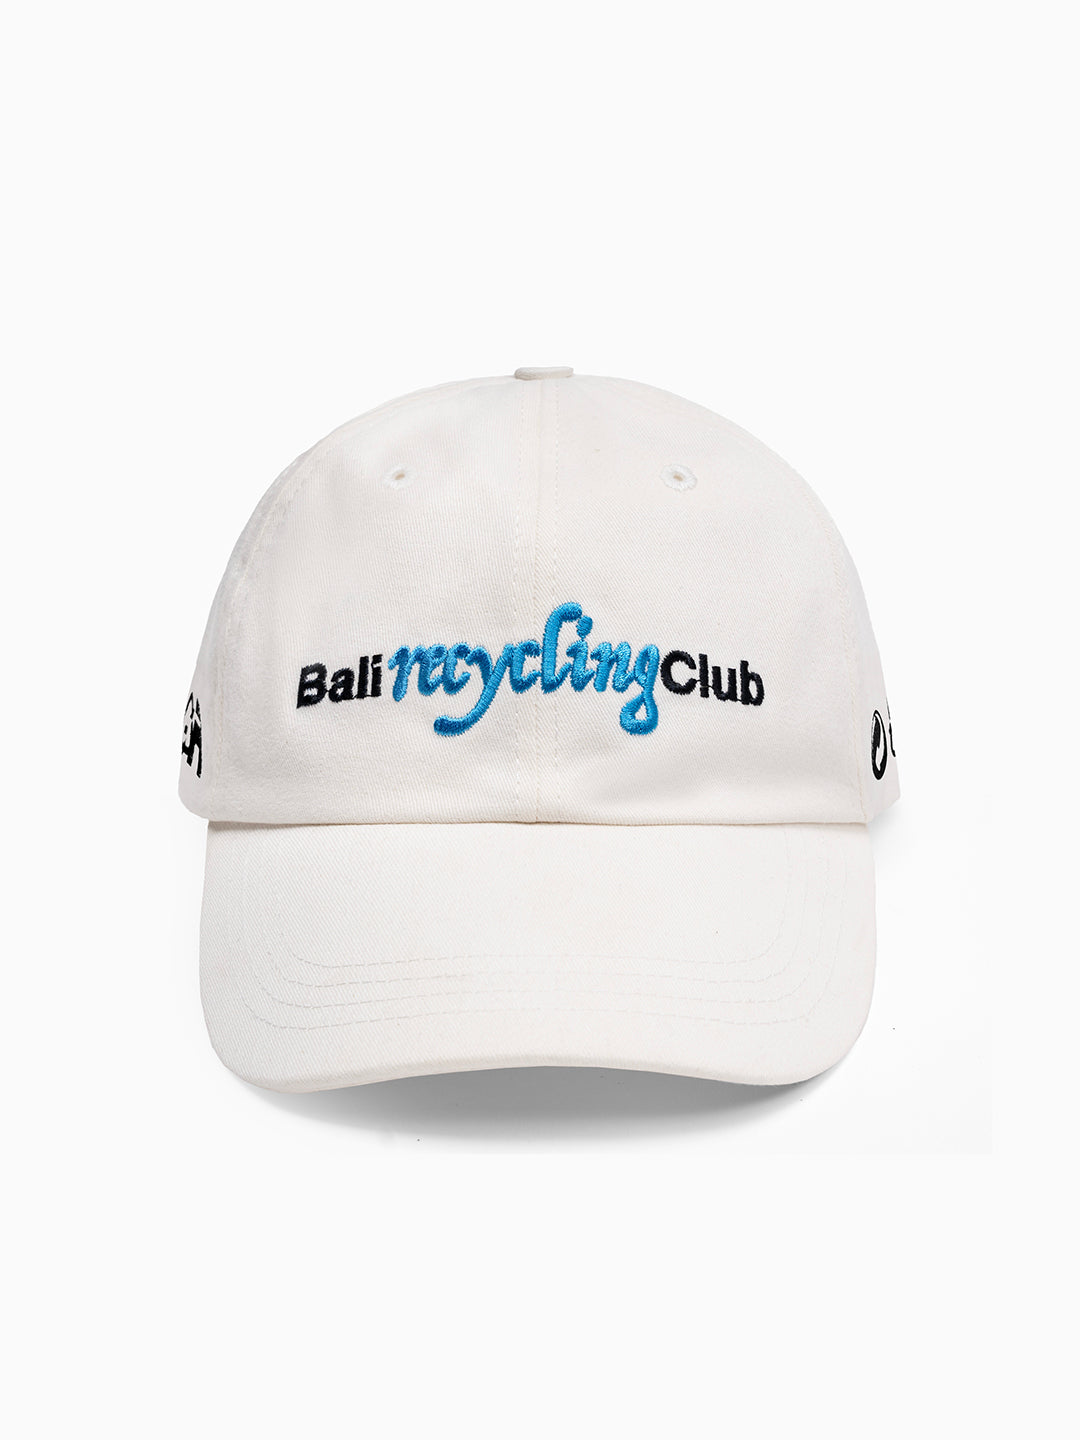 Bali Recycling Club Cap White